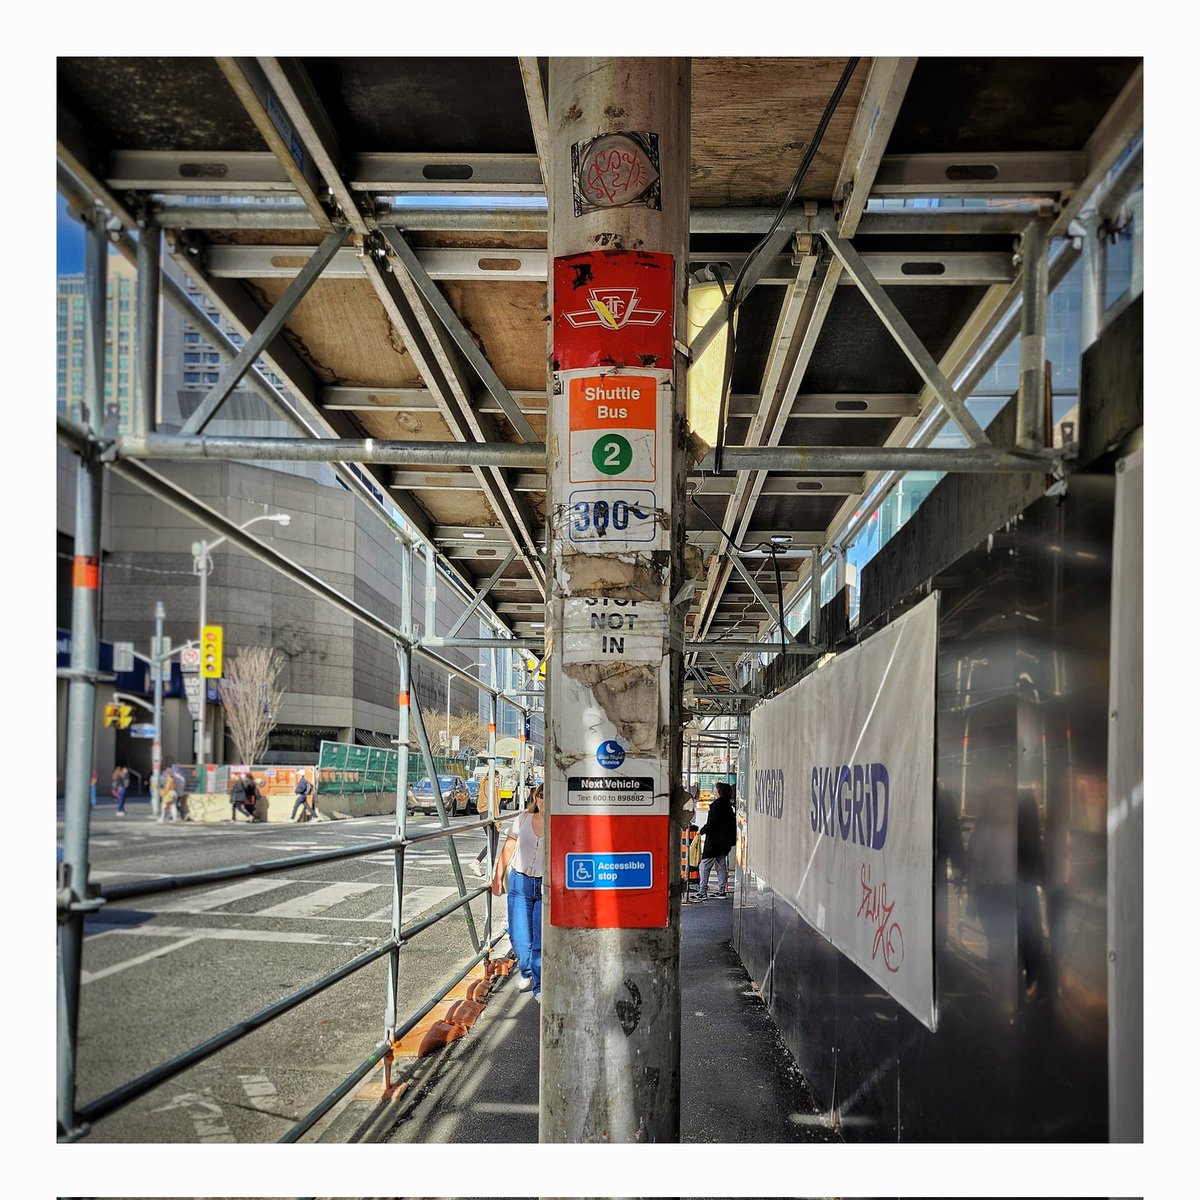 Shuttle Bus Stop (Not In Service). #TTC #Toronto #BloorStreet #YongeStreet #BusStop #TransitPhotography #Photography